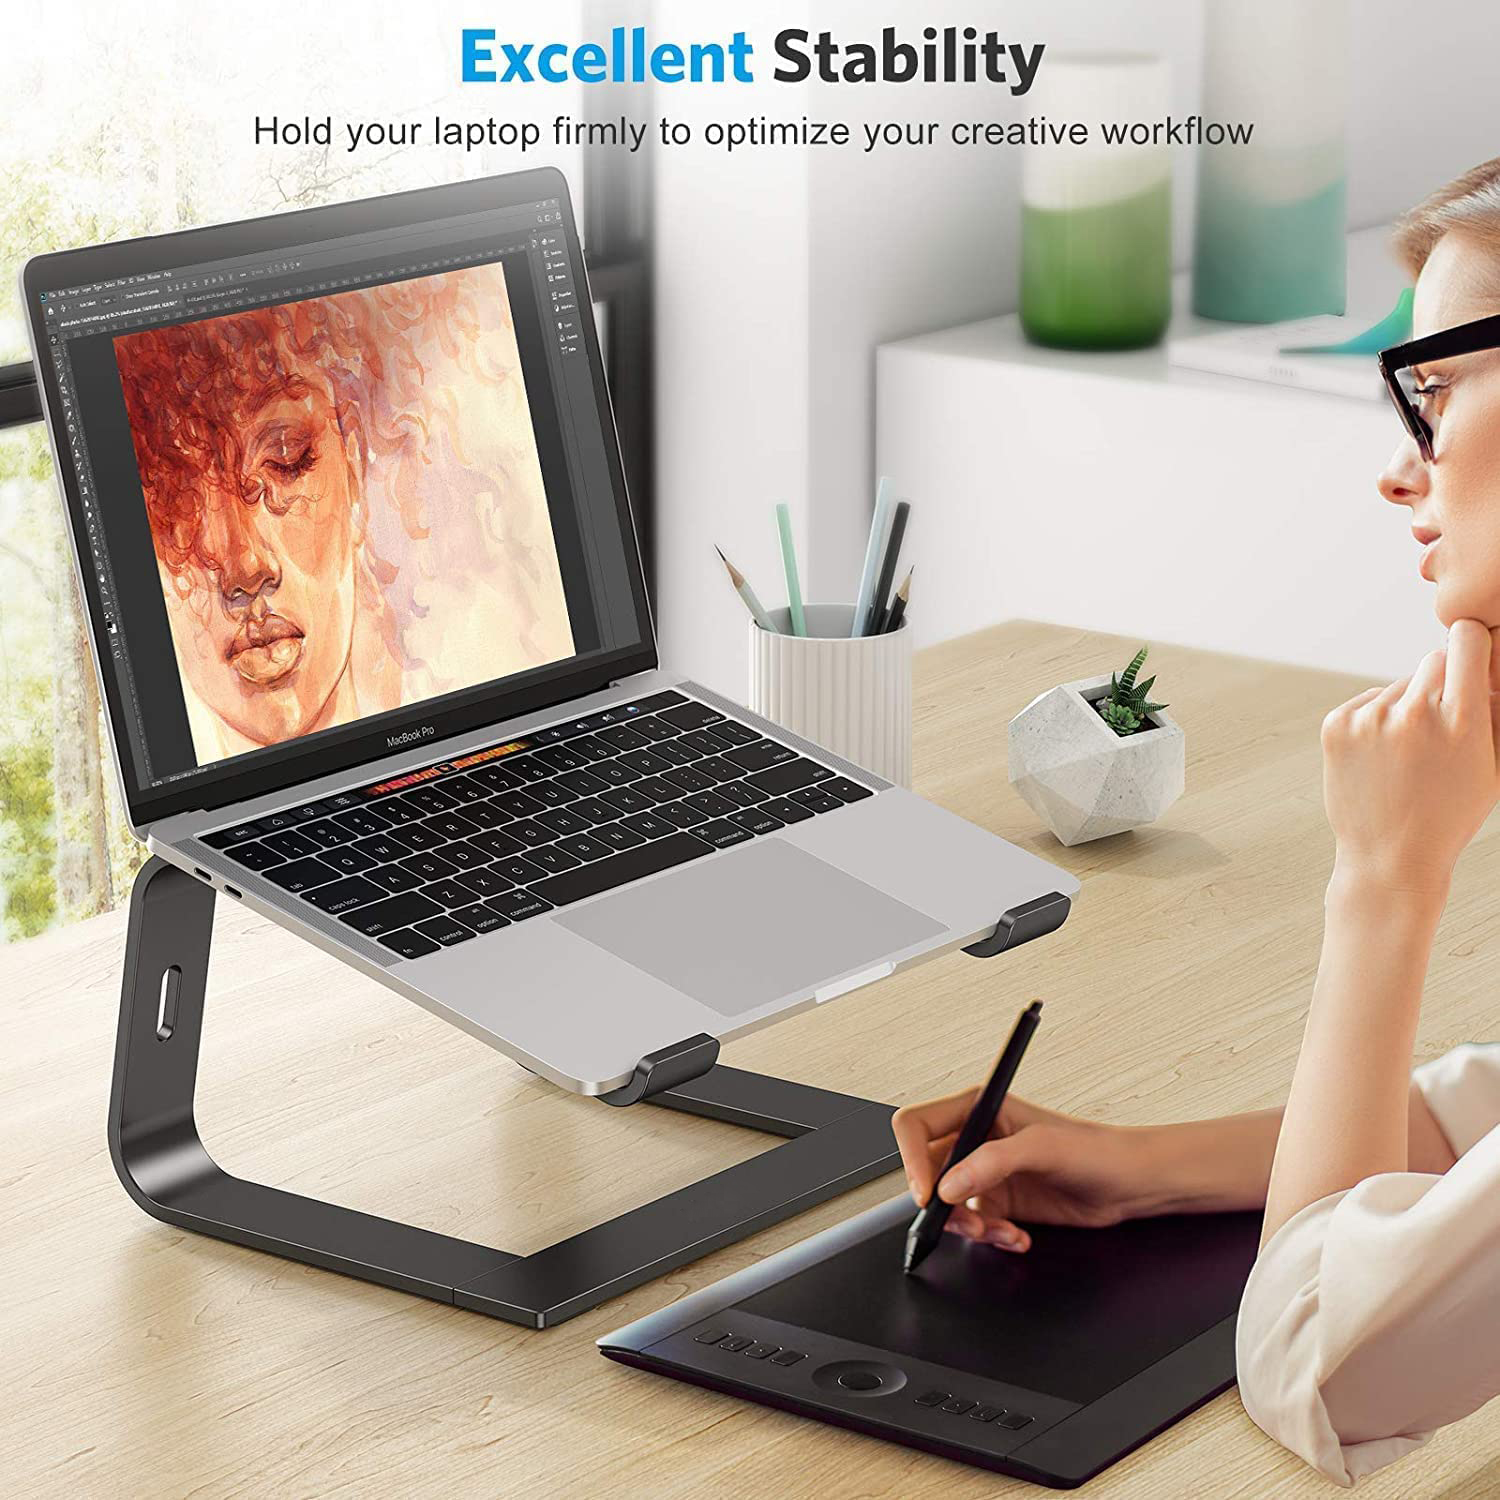 Laptop-Accessories-FRUITFUL-Folding-Laptop-Stand-Holder-Ergonomic-Aluminum-Computer-Stand-Labtop-Riser-Detachable-Tablet-Holder-Desktop-Mount-for-10-15-6-Laptop-49